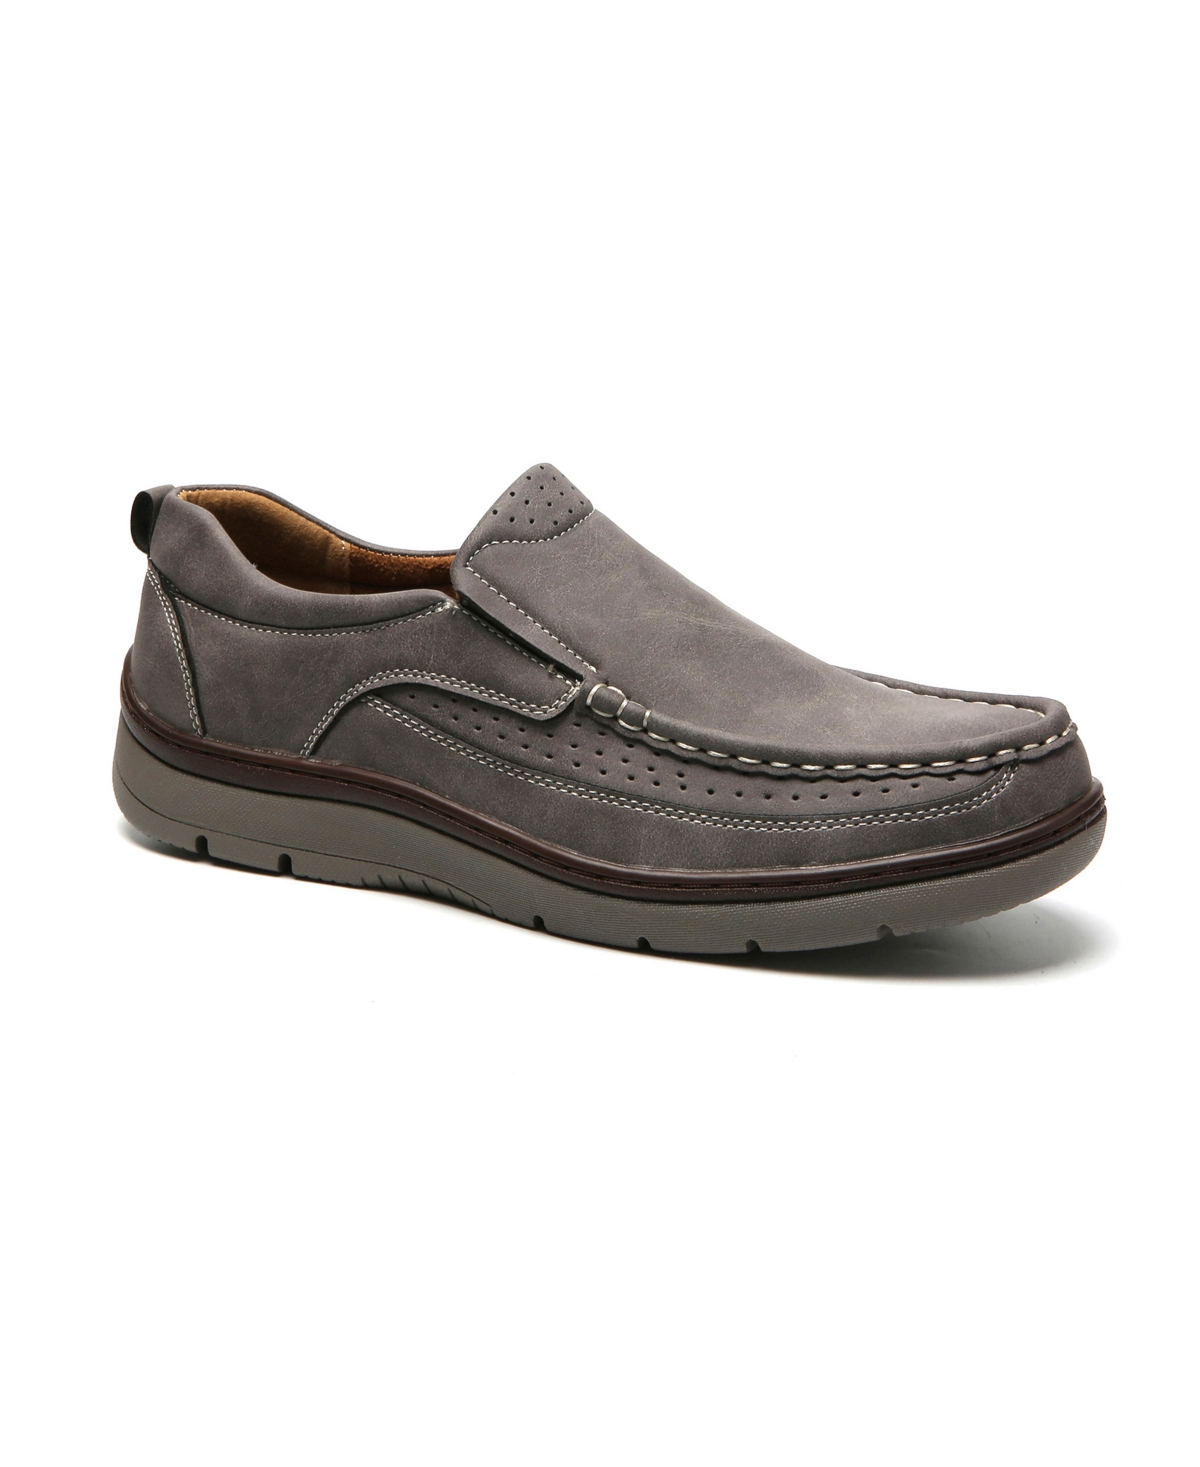 Men's Slip On Comfort Casual Shoes - Brown